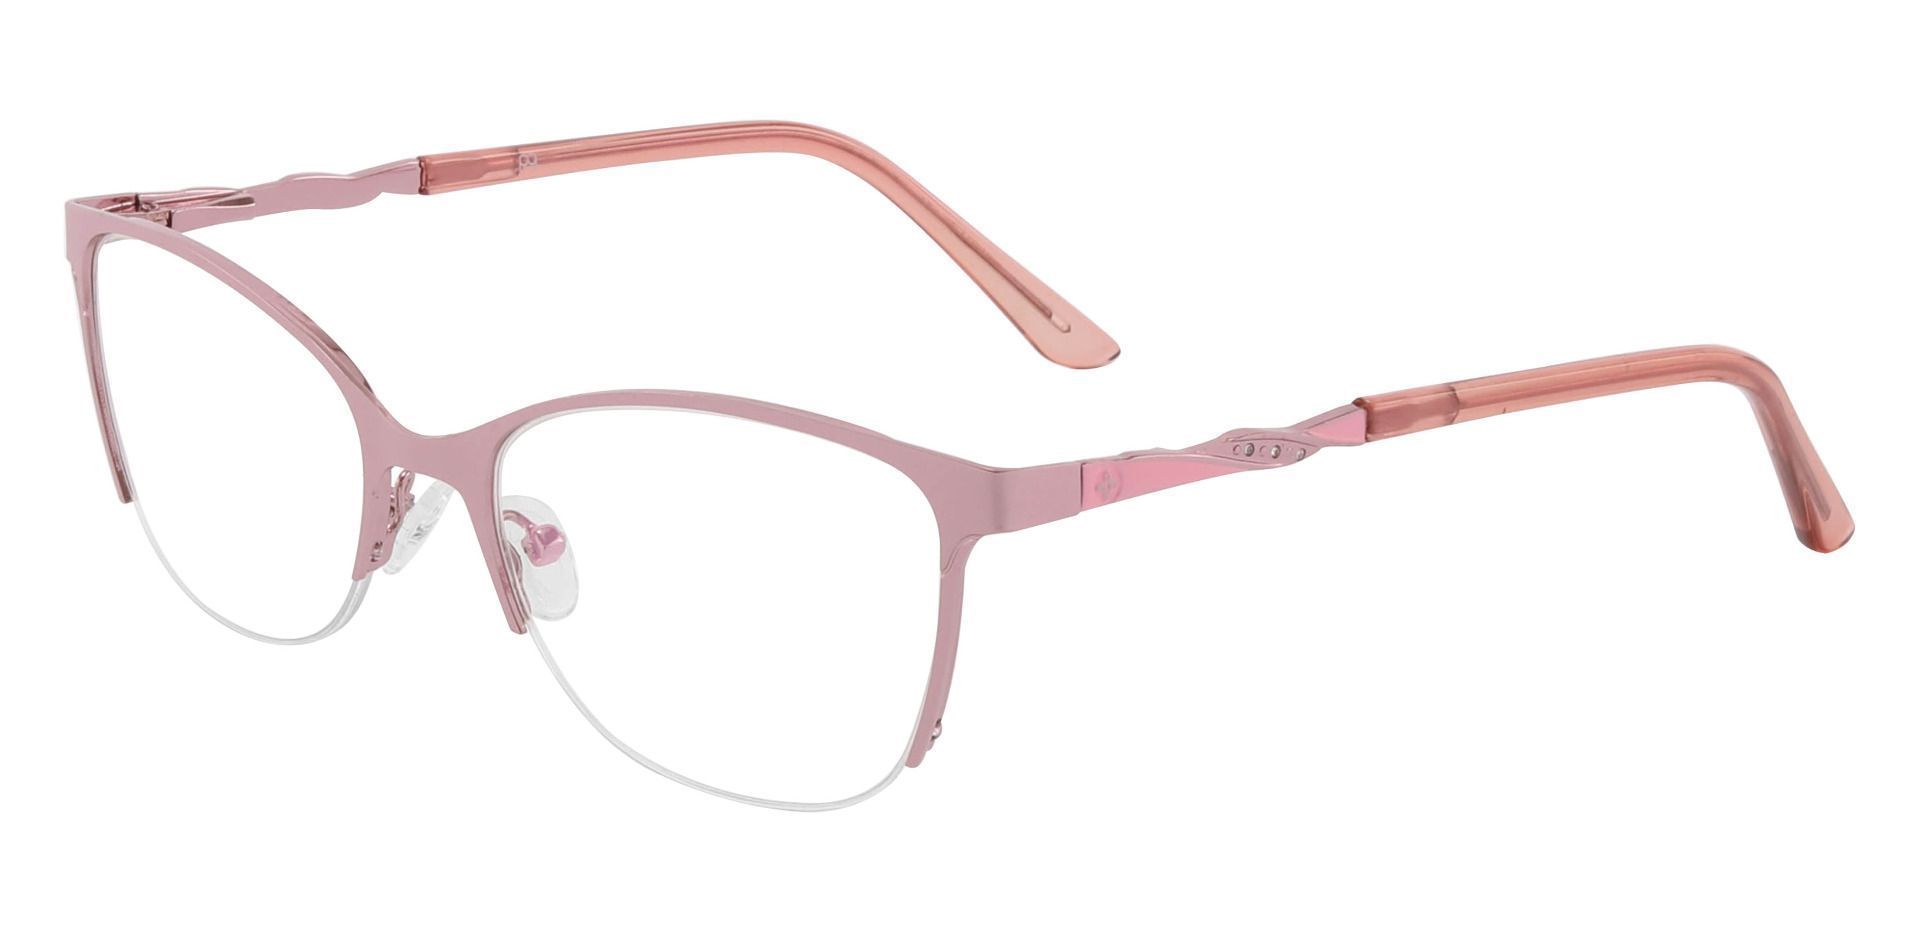 Topeka Cat Eye Lined Bifocal Glasses - Pink